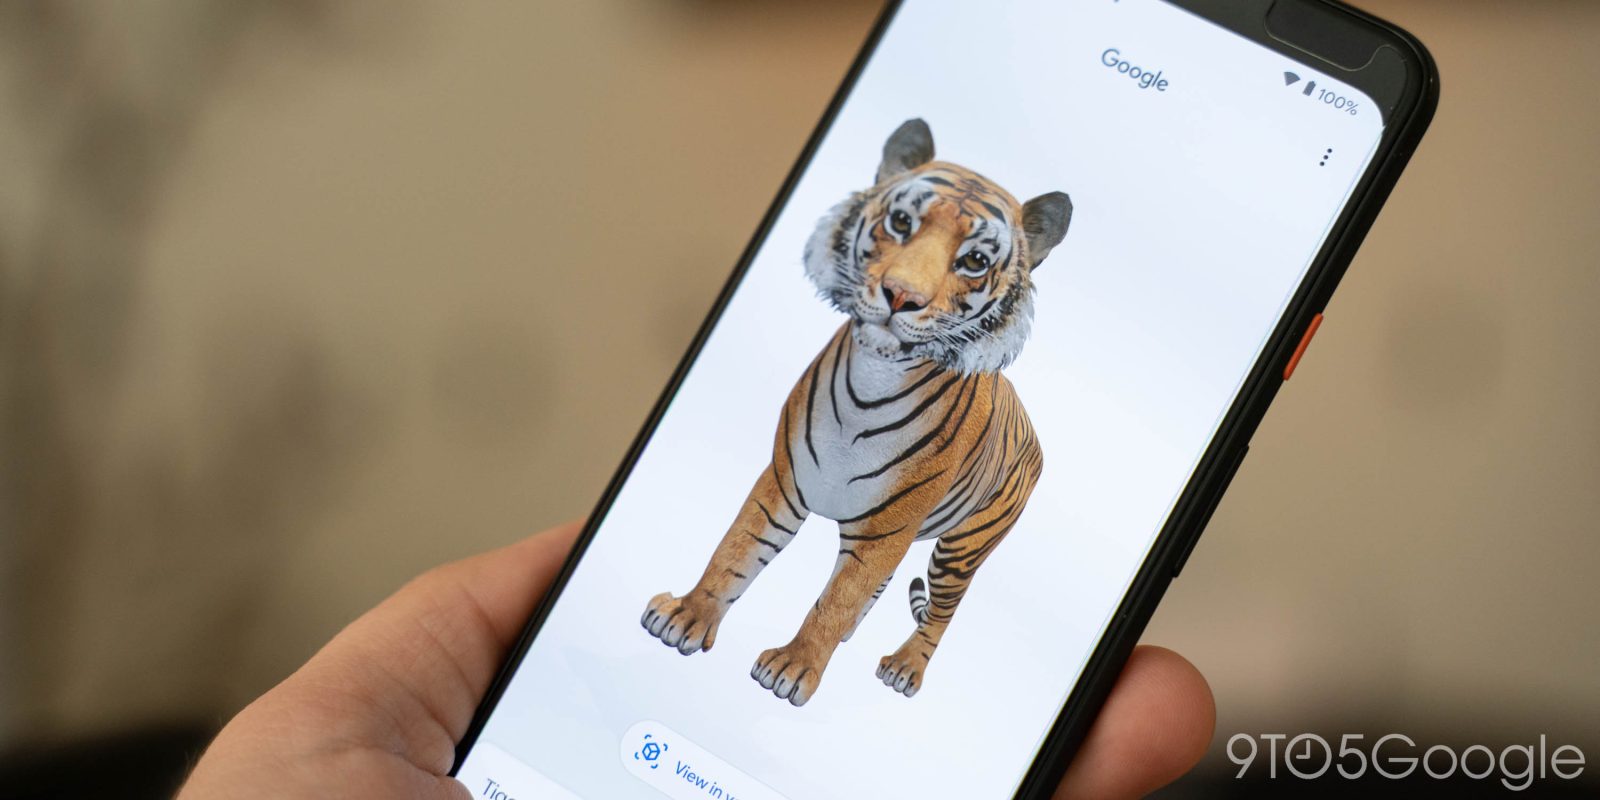 Google 3D tiger live view